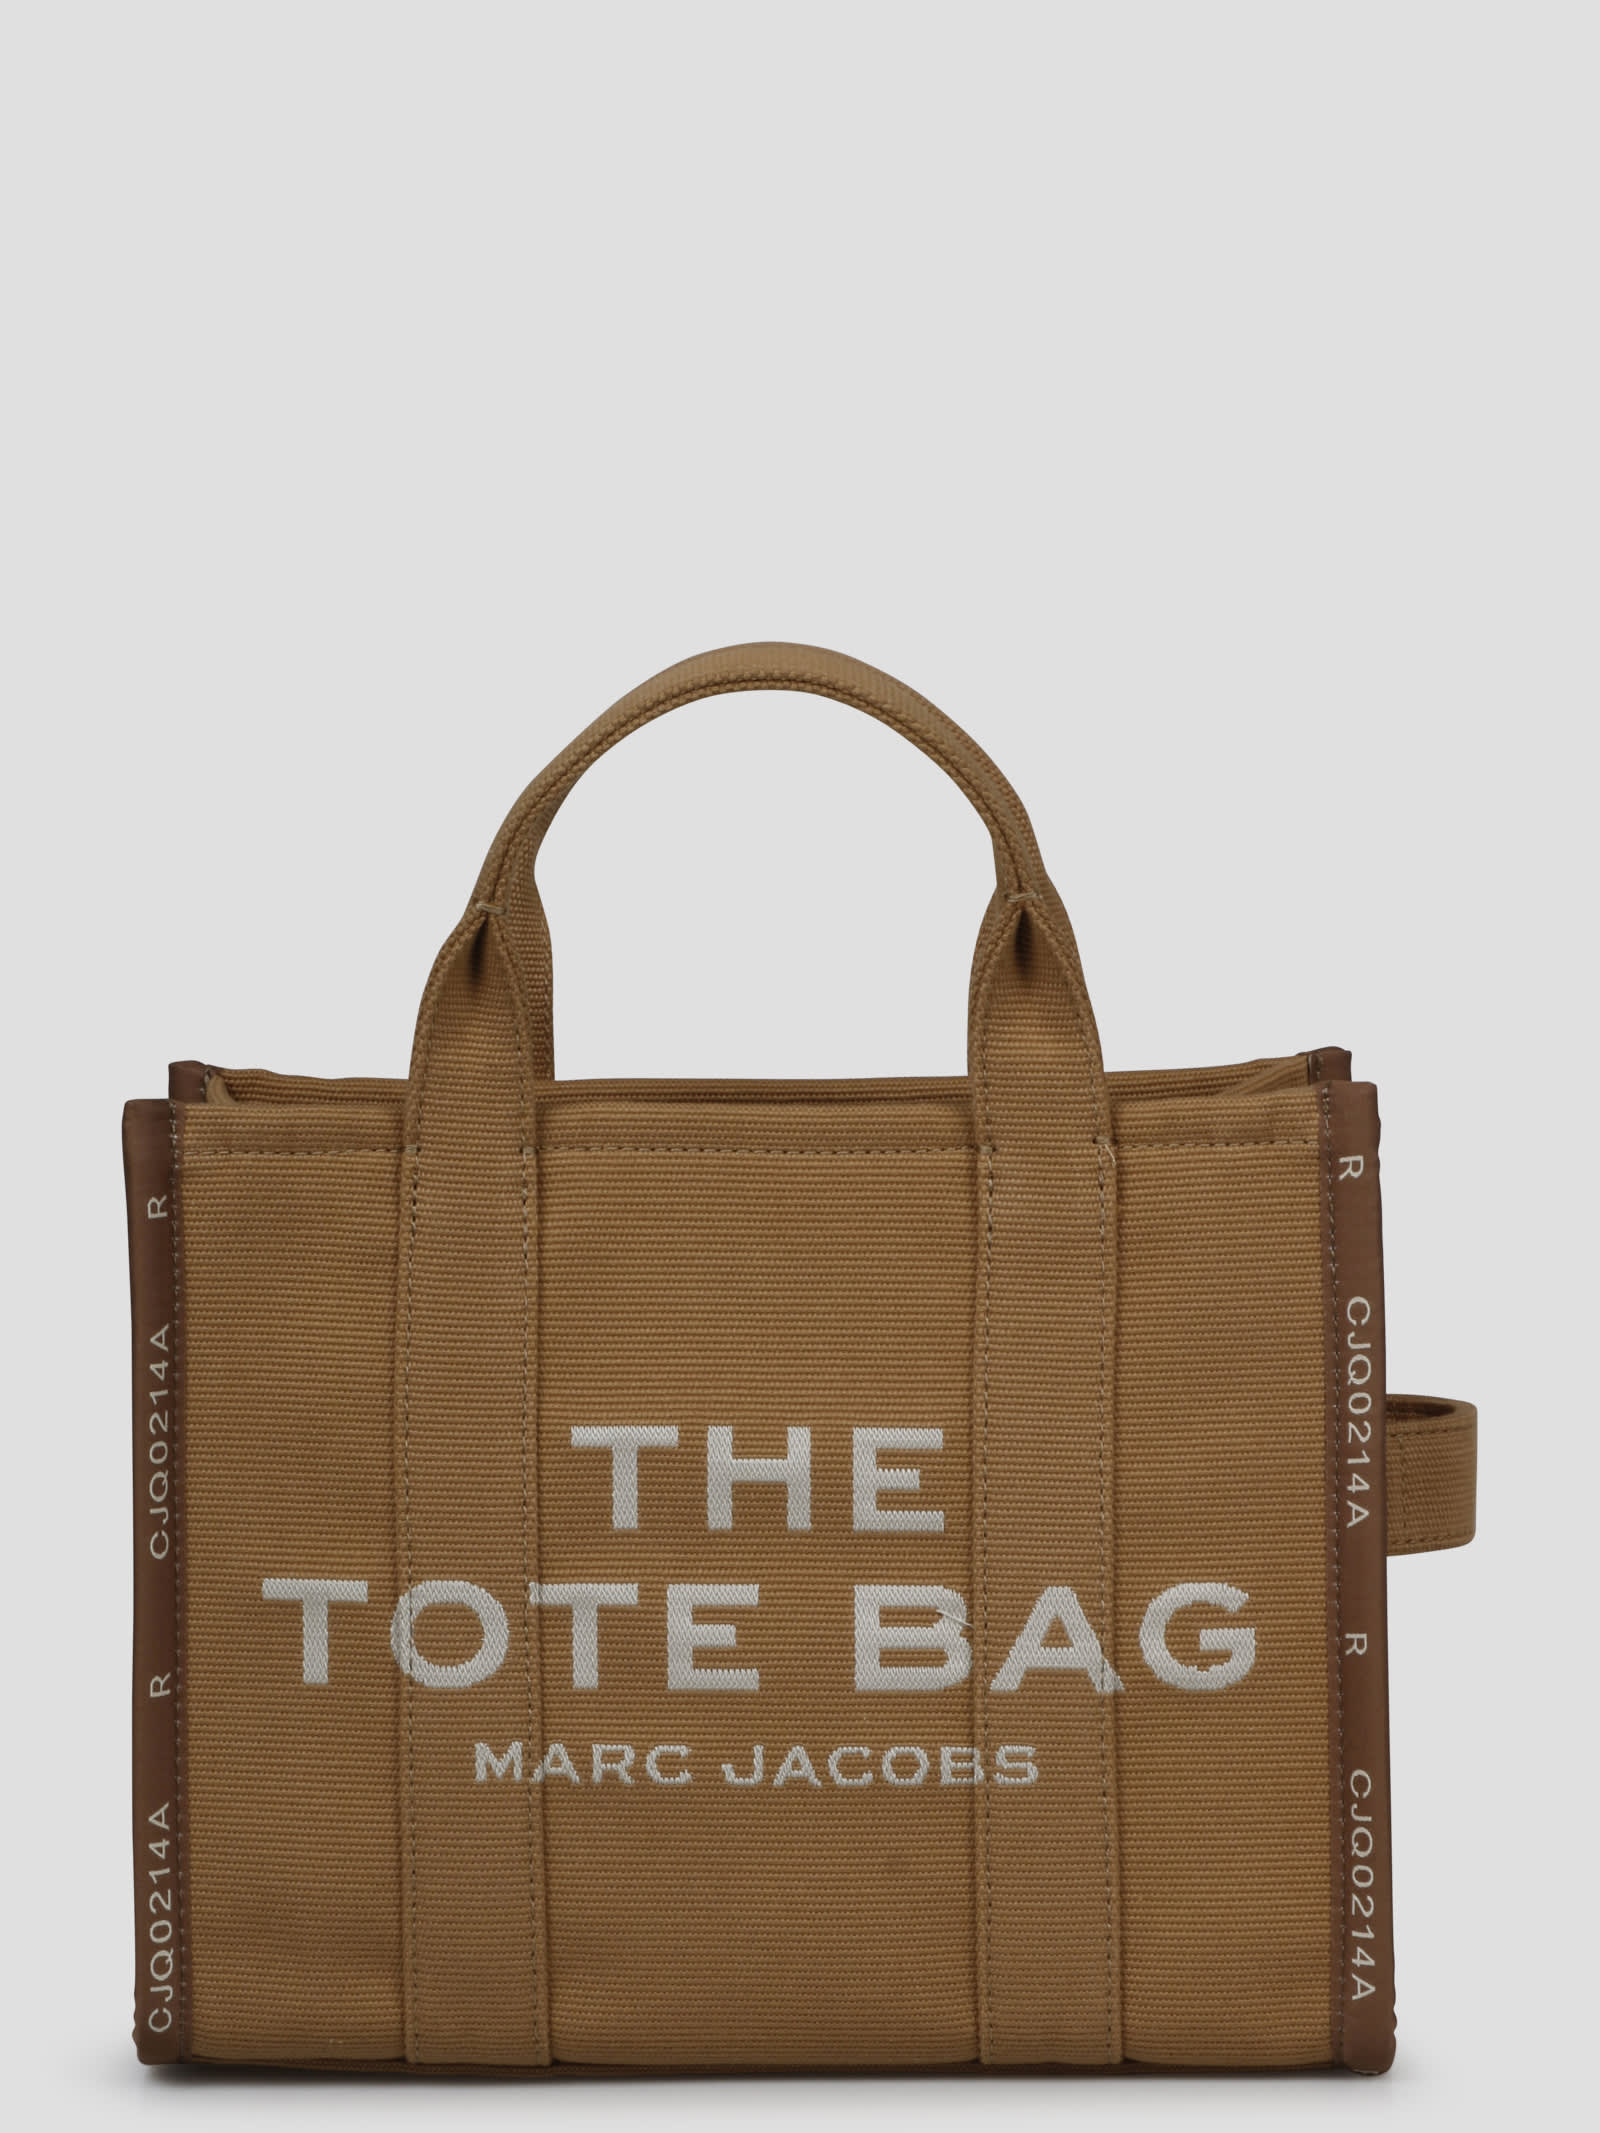 THE JACQUARD MEDIUM TOTE BAG for Women - Marc Jacobs